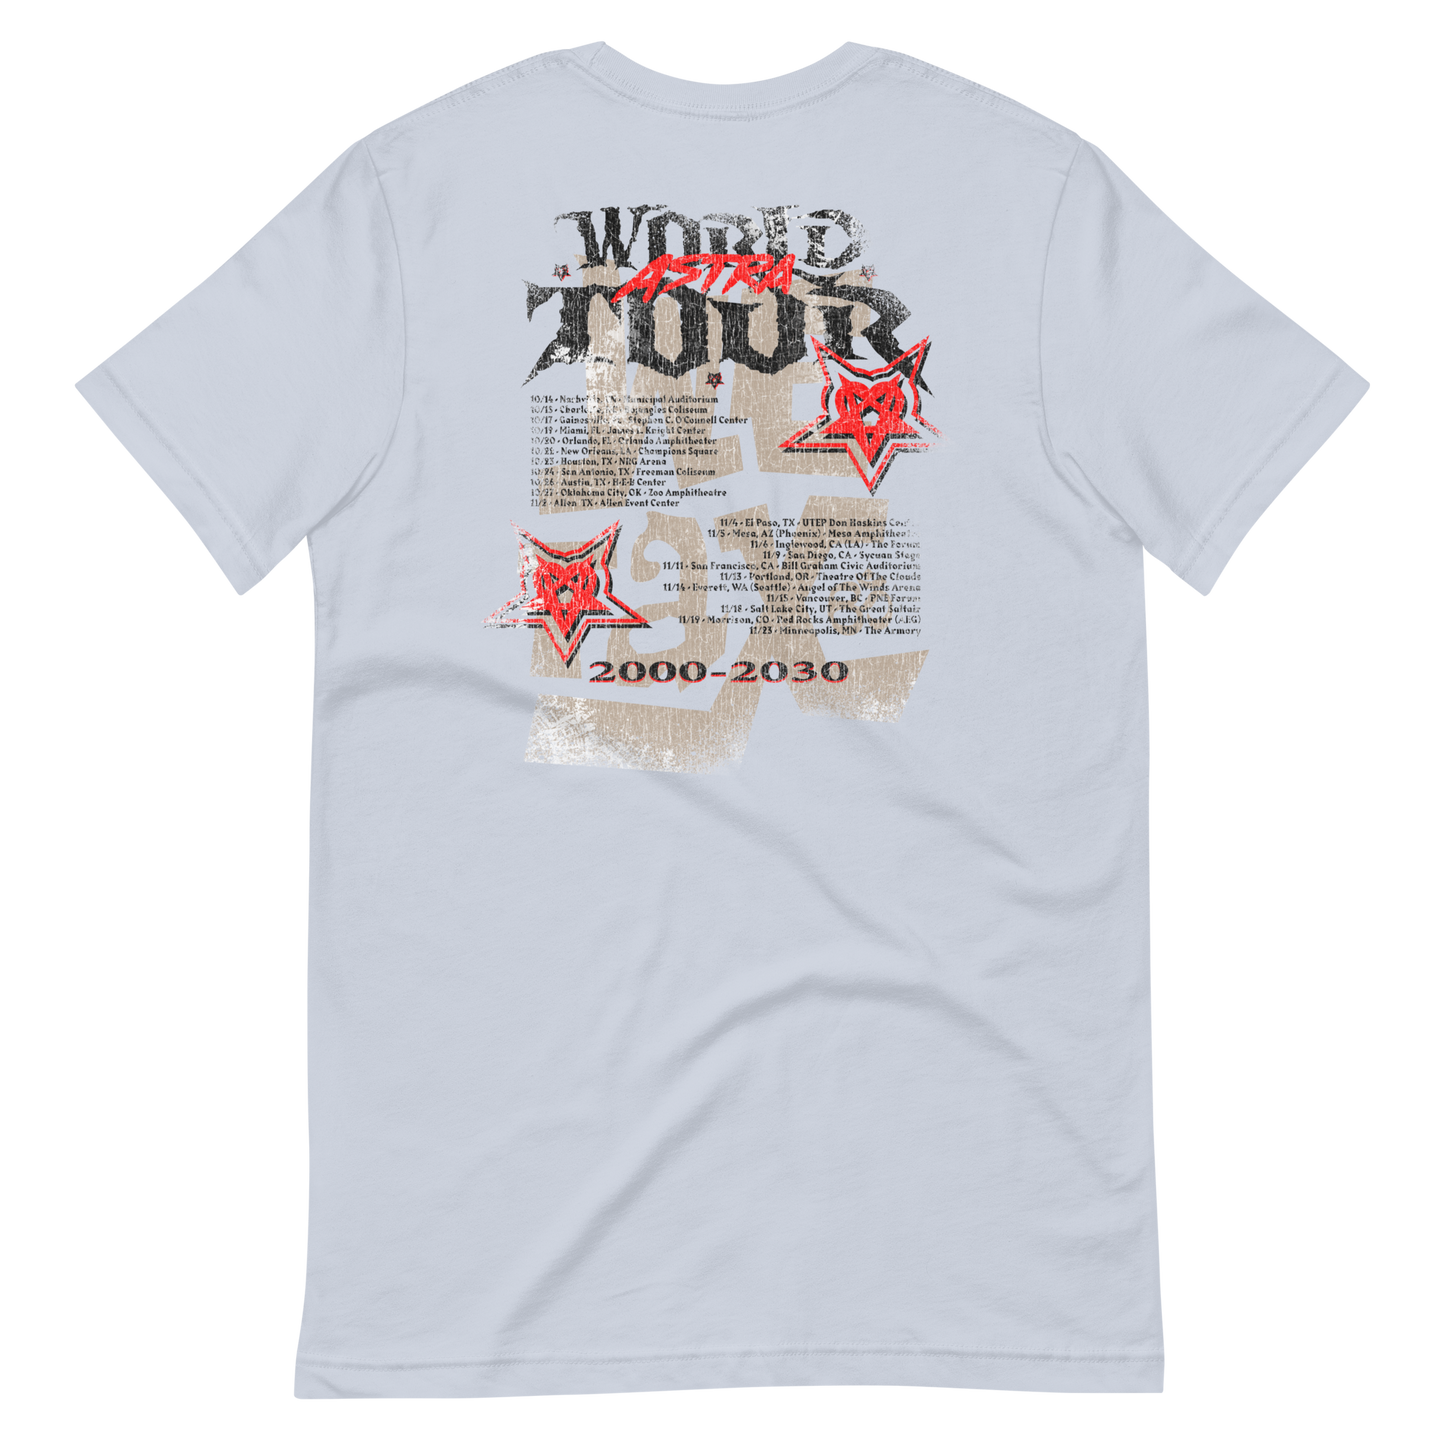 Astra World Tour Series (Shirt)